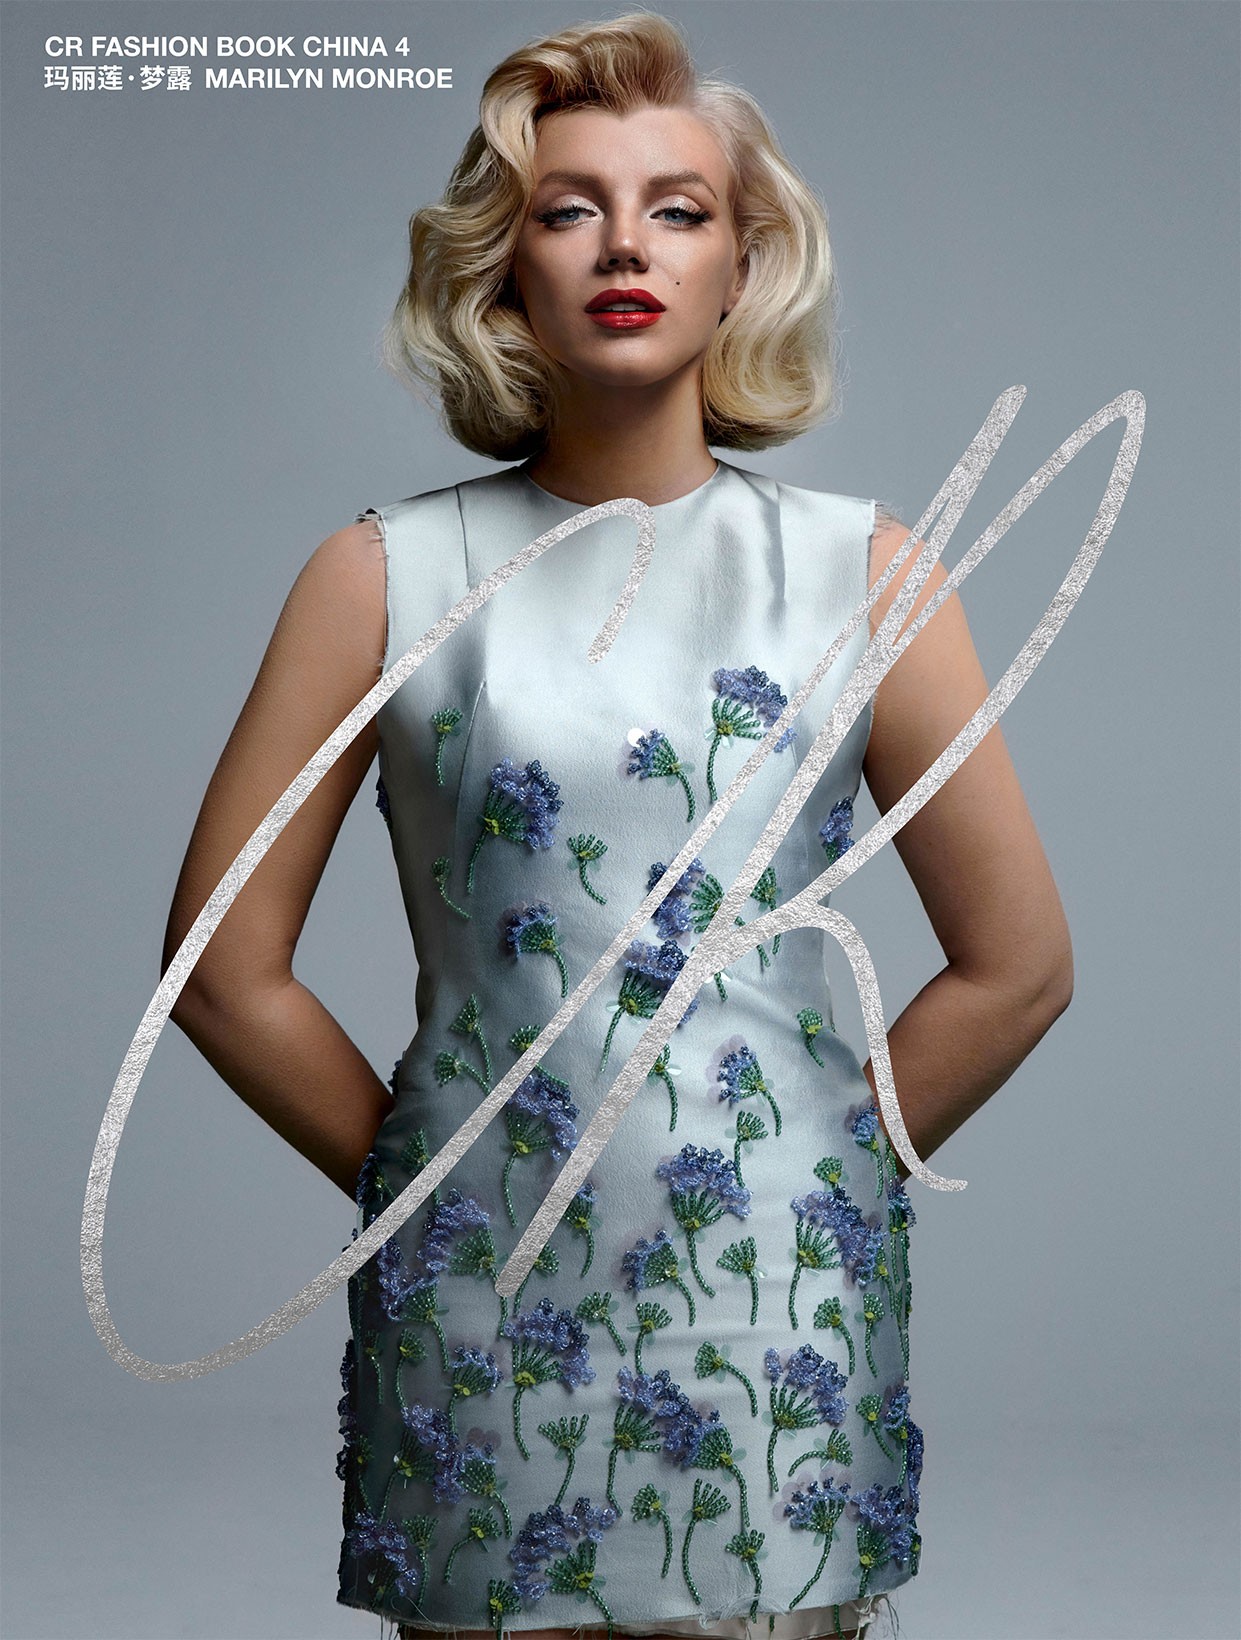 Оцифрованное изображение Мэрилин Монро поместили на обложку CR Fashion Book China (фото 2)